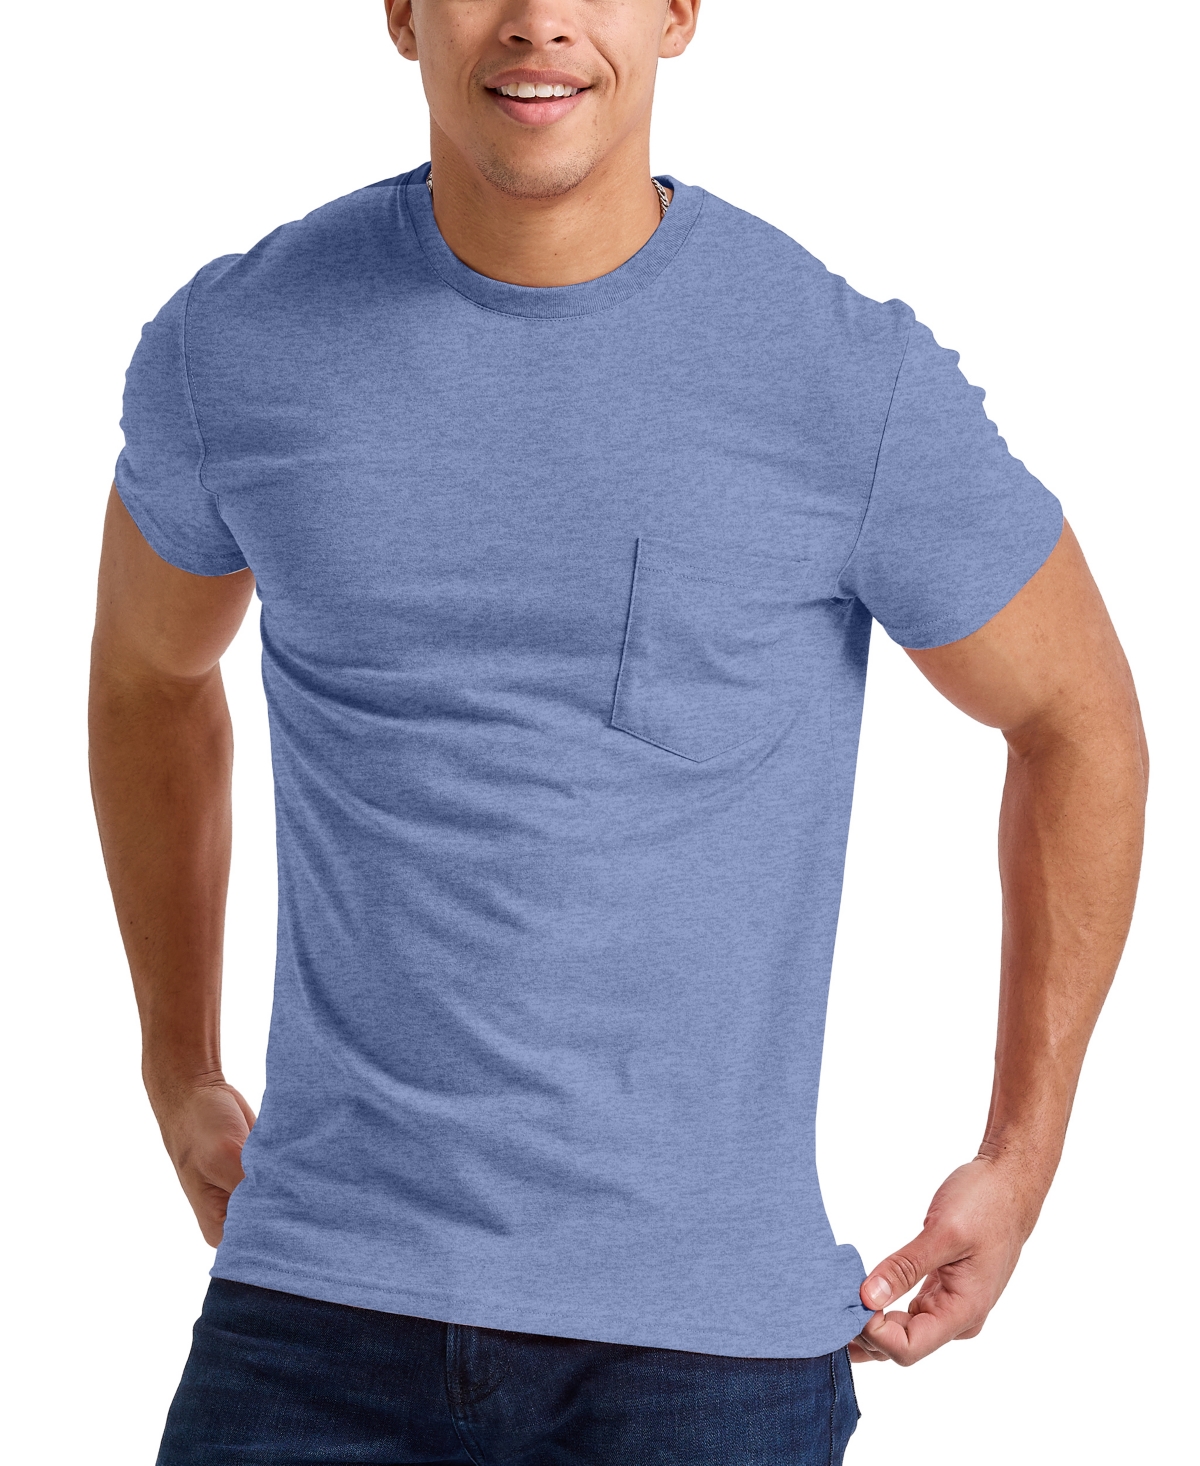 Men's Hanes Originals Tri-Blend Short Sleeve Pocket T-shirt - Eco White